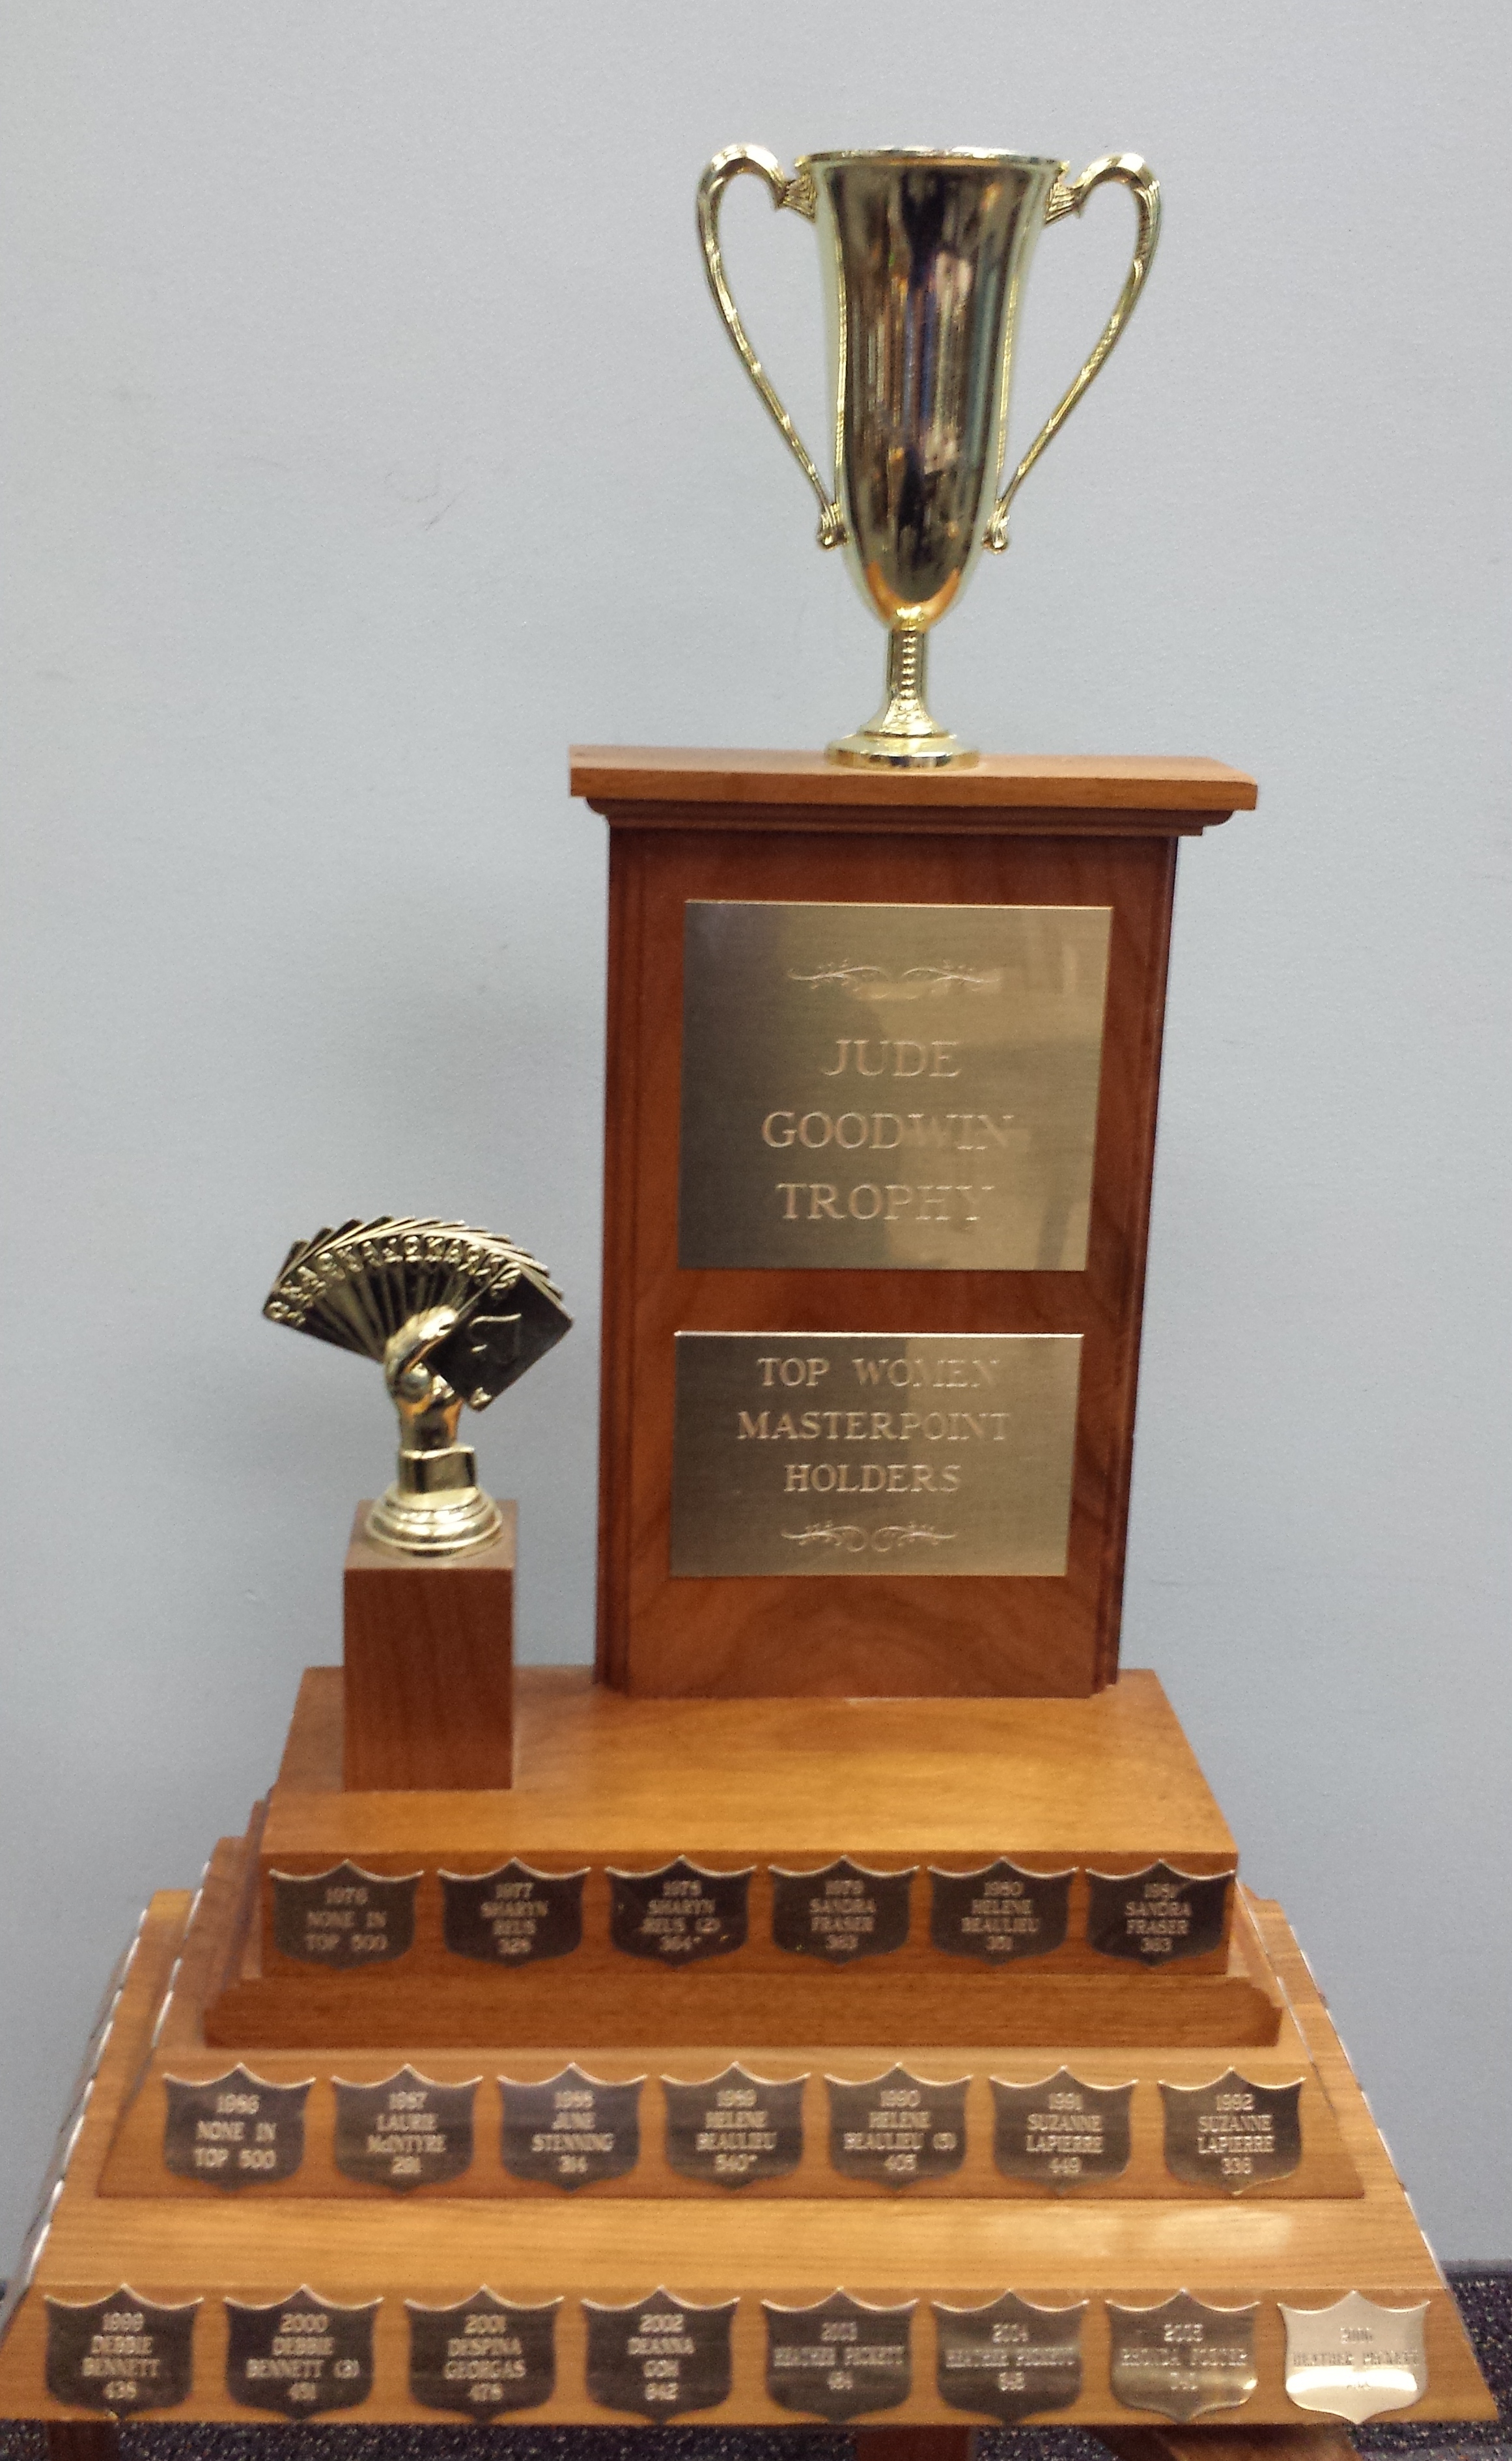 Jude Goodwin Trophy, Canadian Bridge Federation